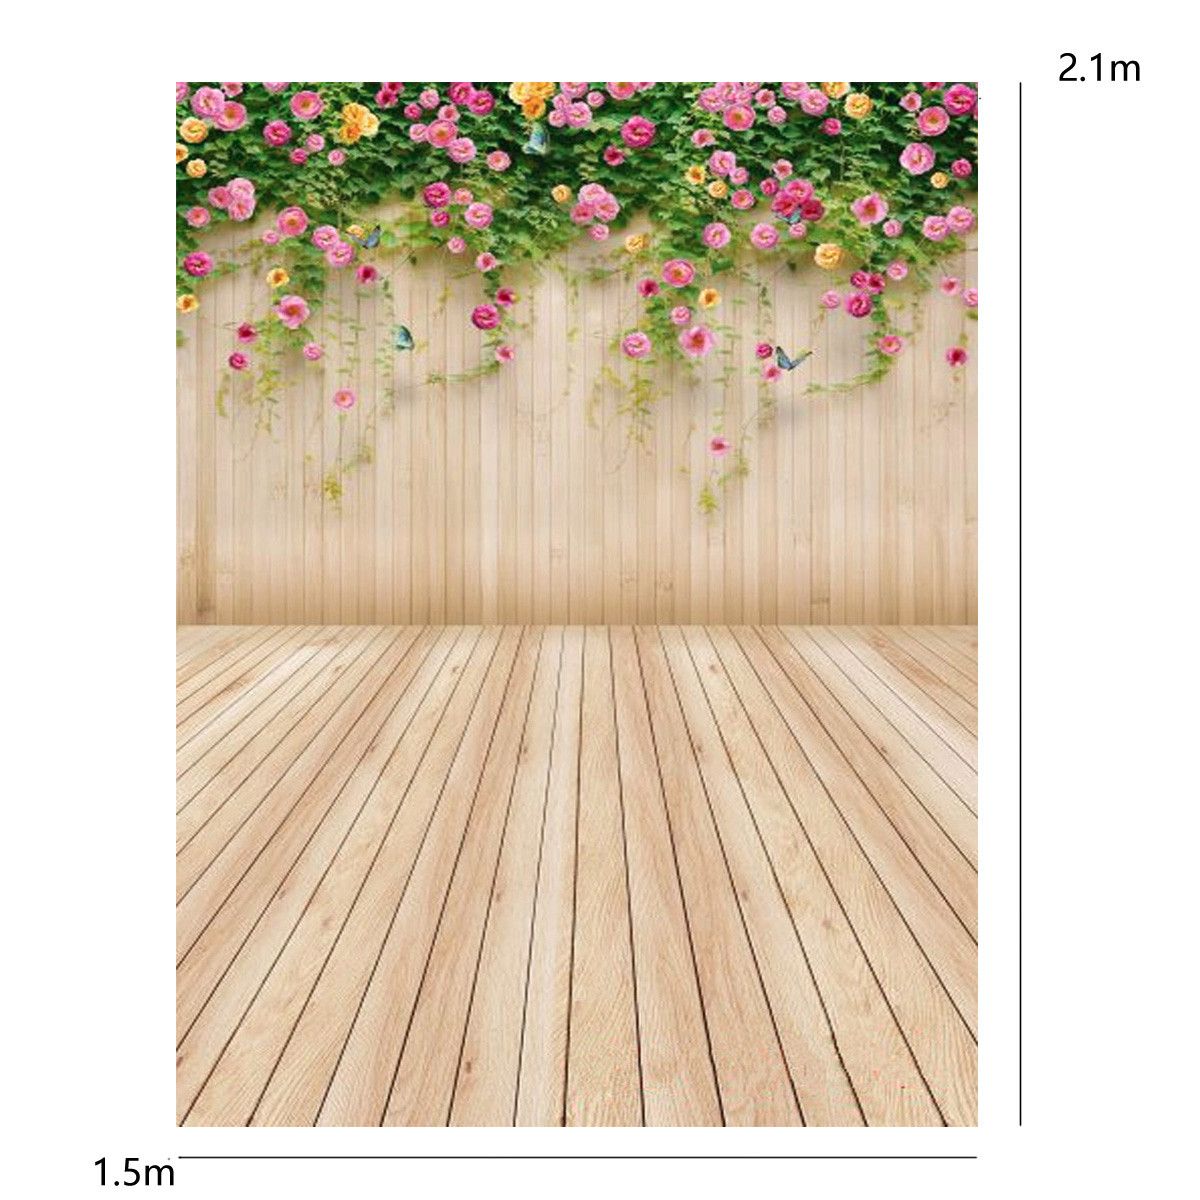 5x7ft-Vinyl-Flower-Wood-Floor-Photography-Background-Backdrop-For-Studio-Photo-Prop-Decoration-1168736